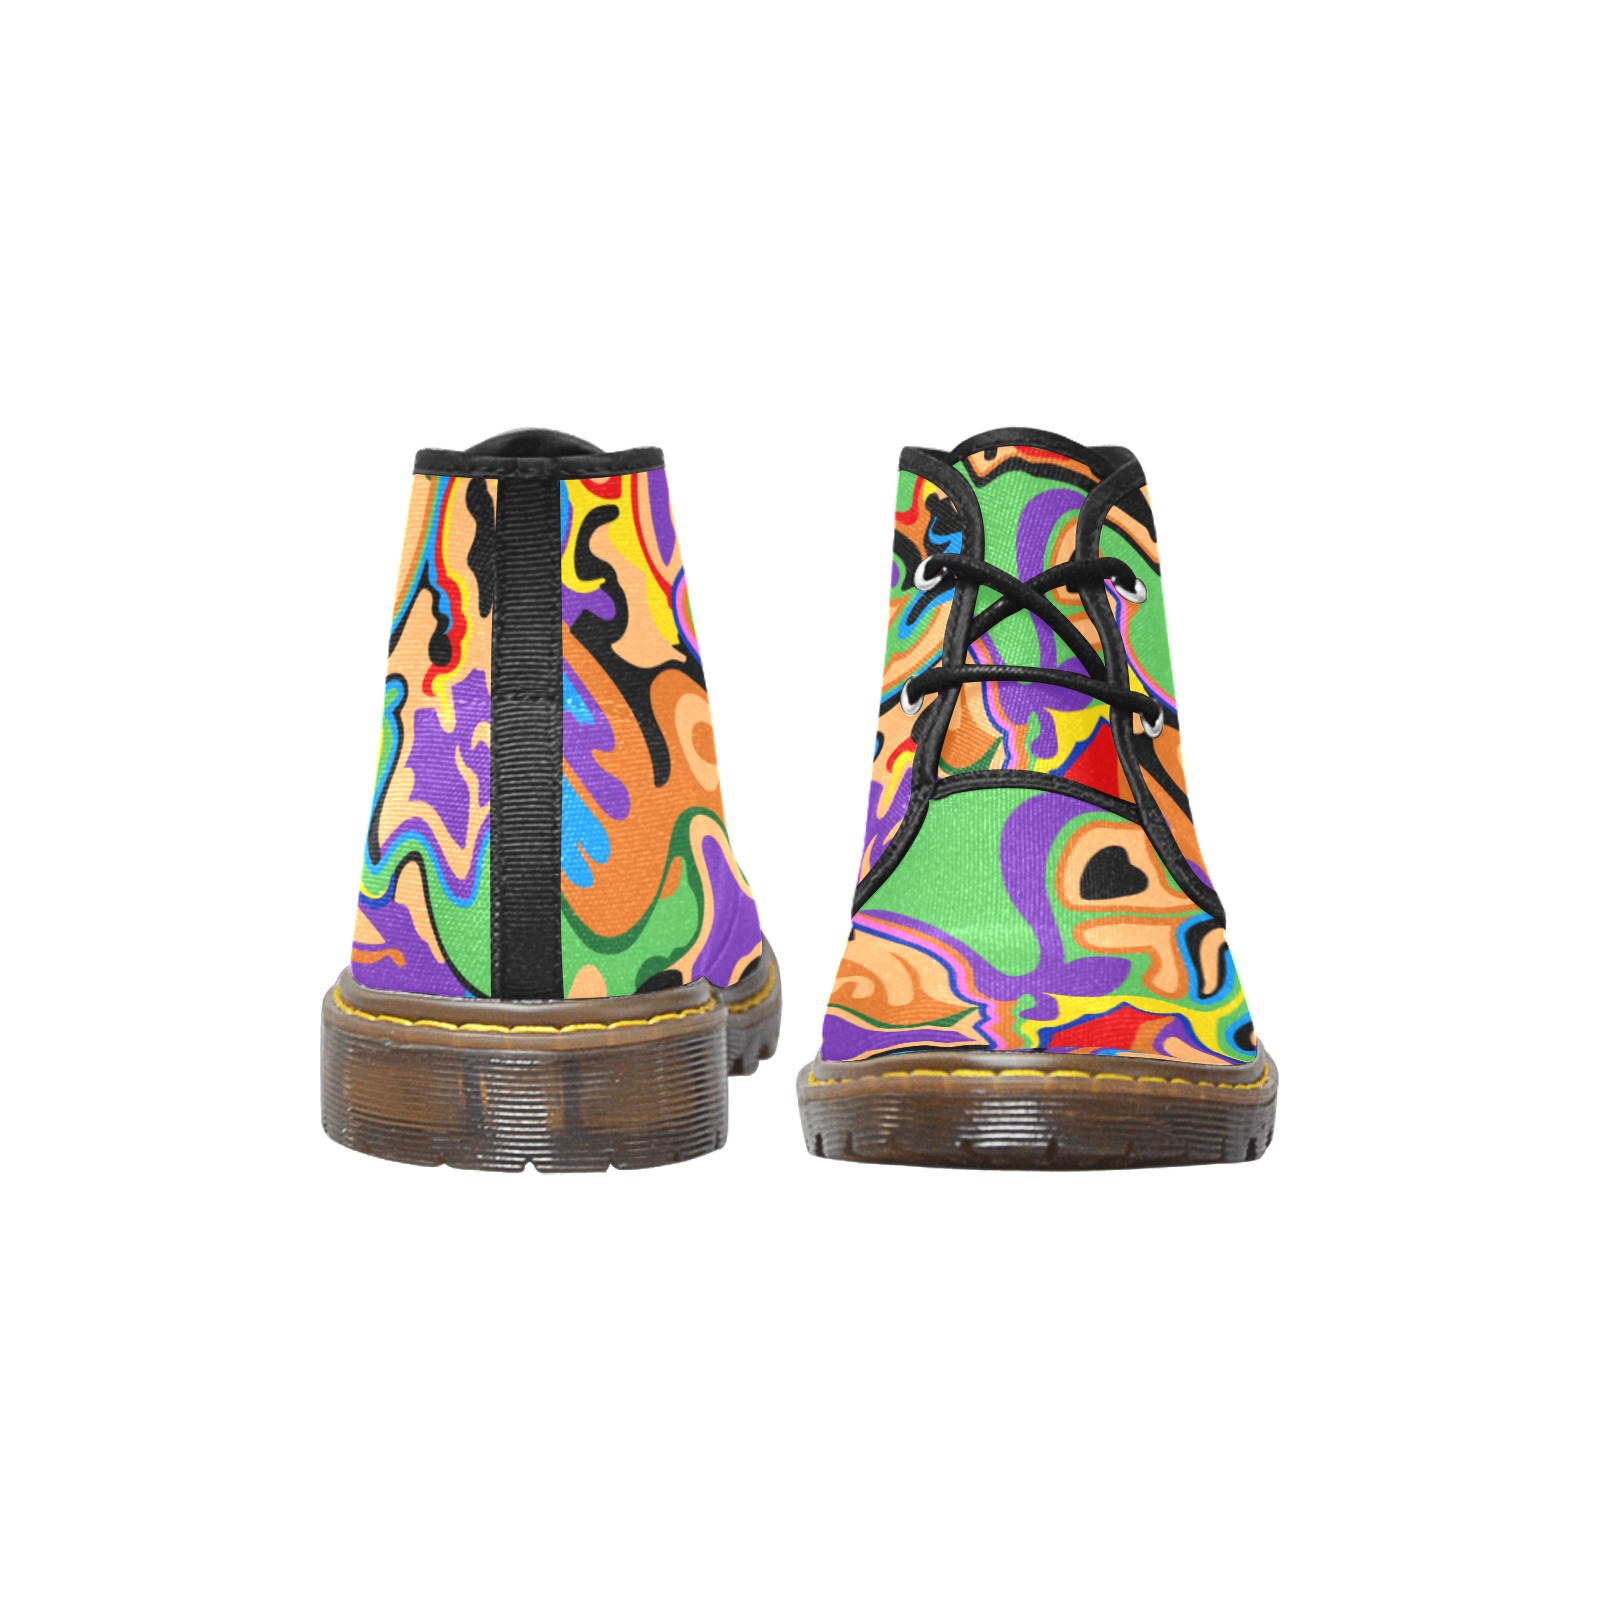 Marley J Med top boots Women Women's Canvas Chukka Boots (Model 2402-1)